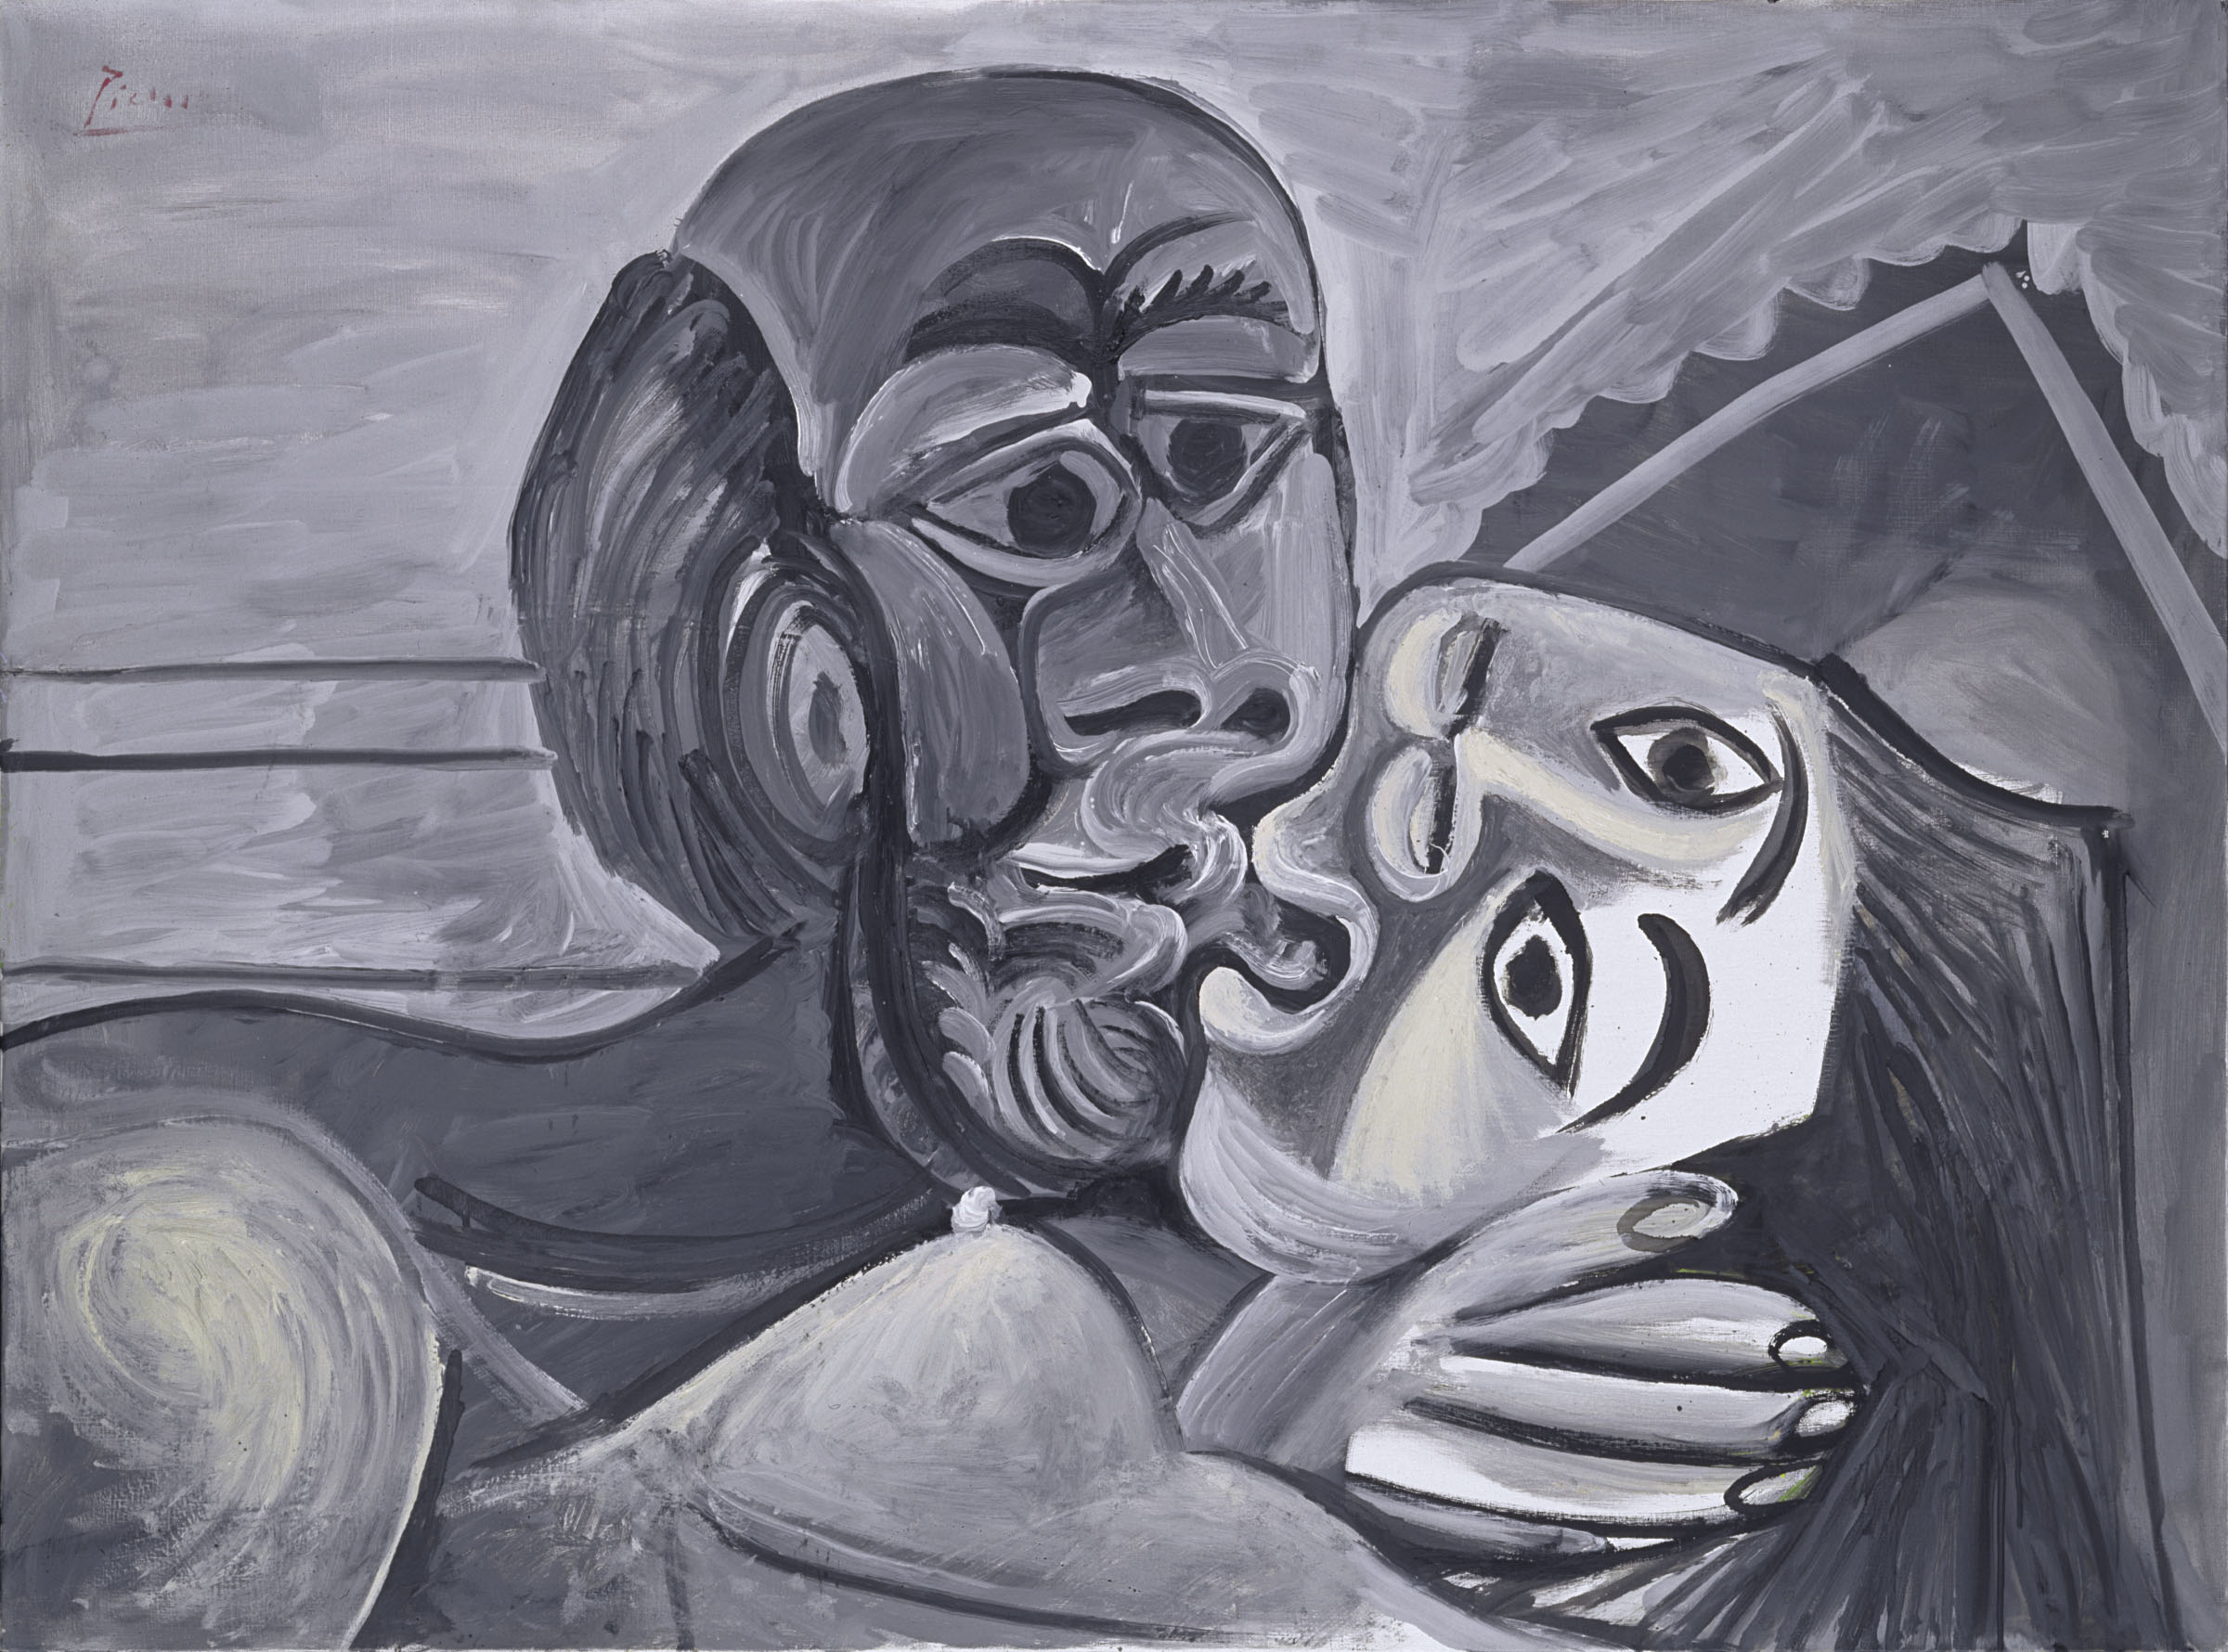 https://glasstire.com/wp-content/uploads/2013/02/Picasso-The-Kiss.jpg